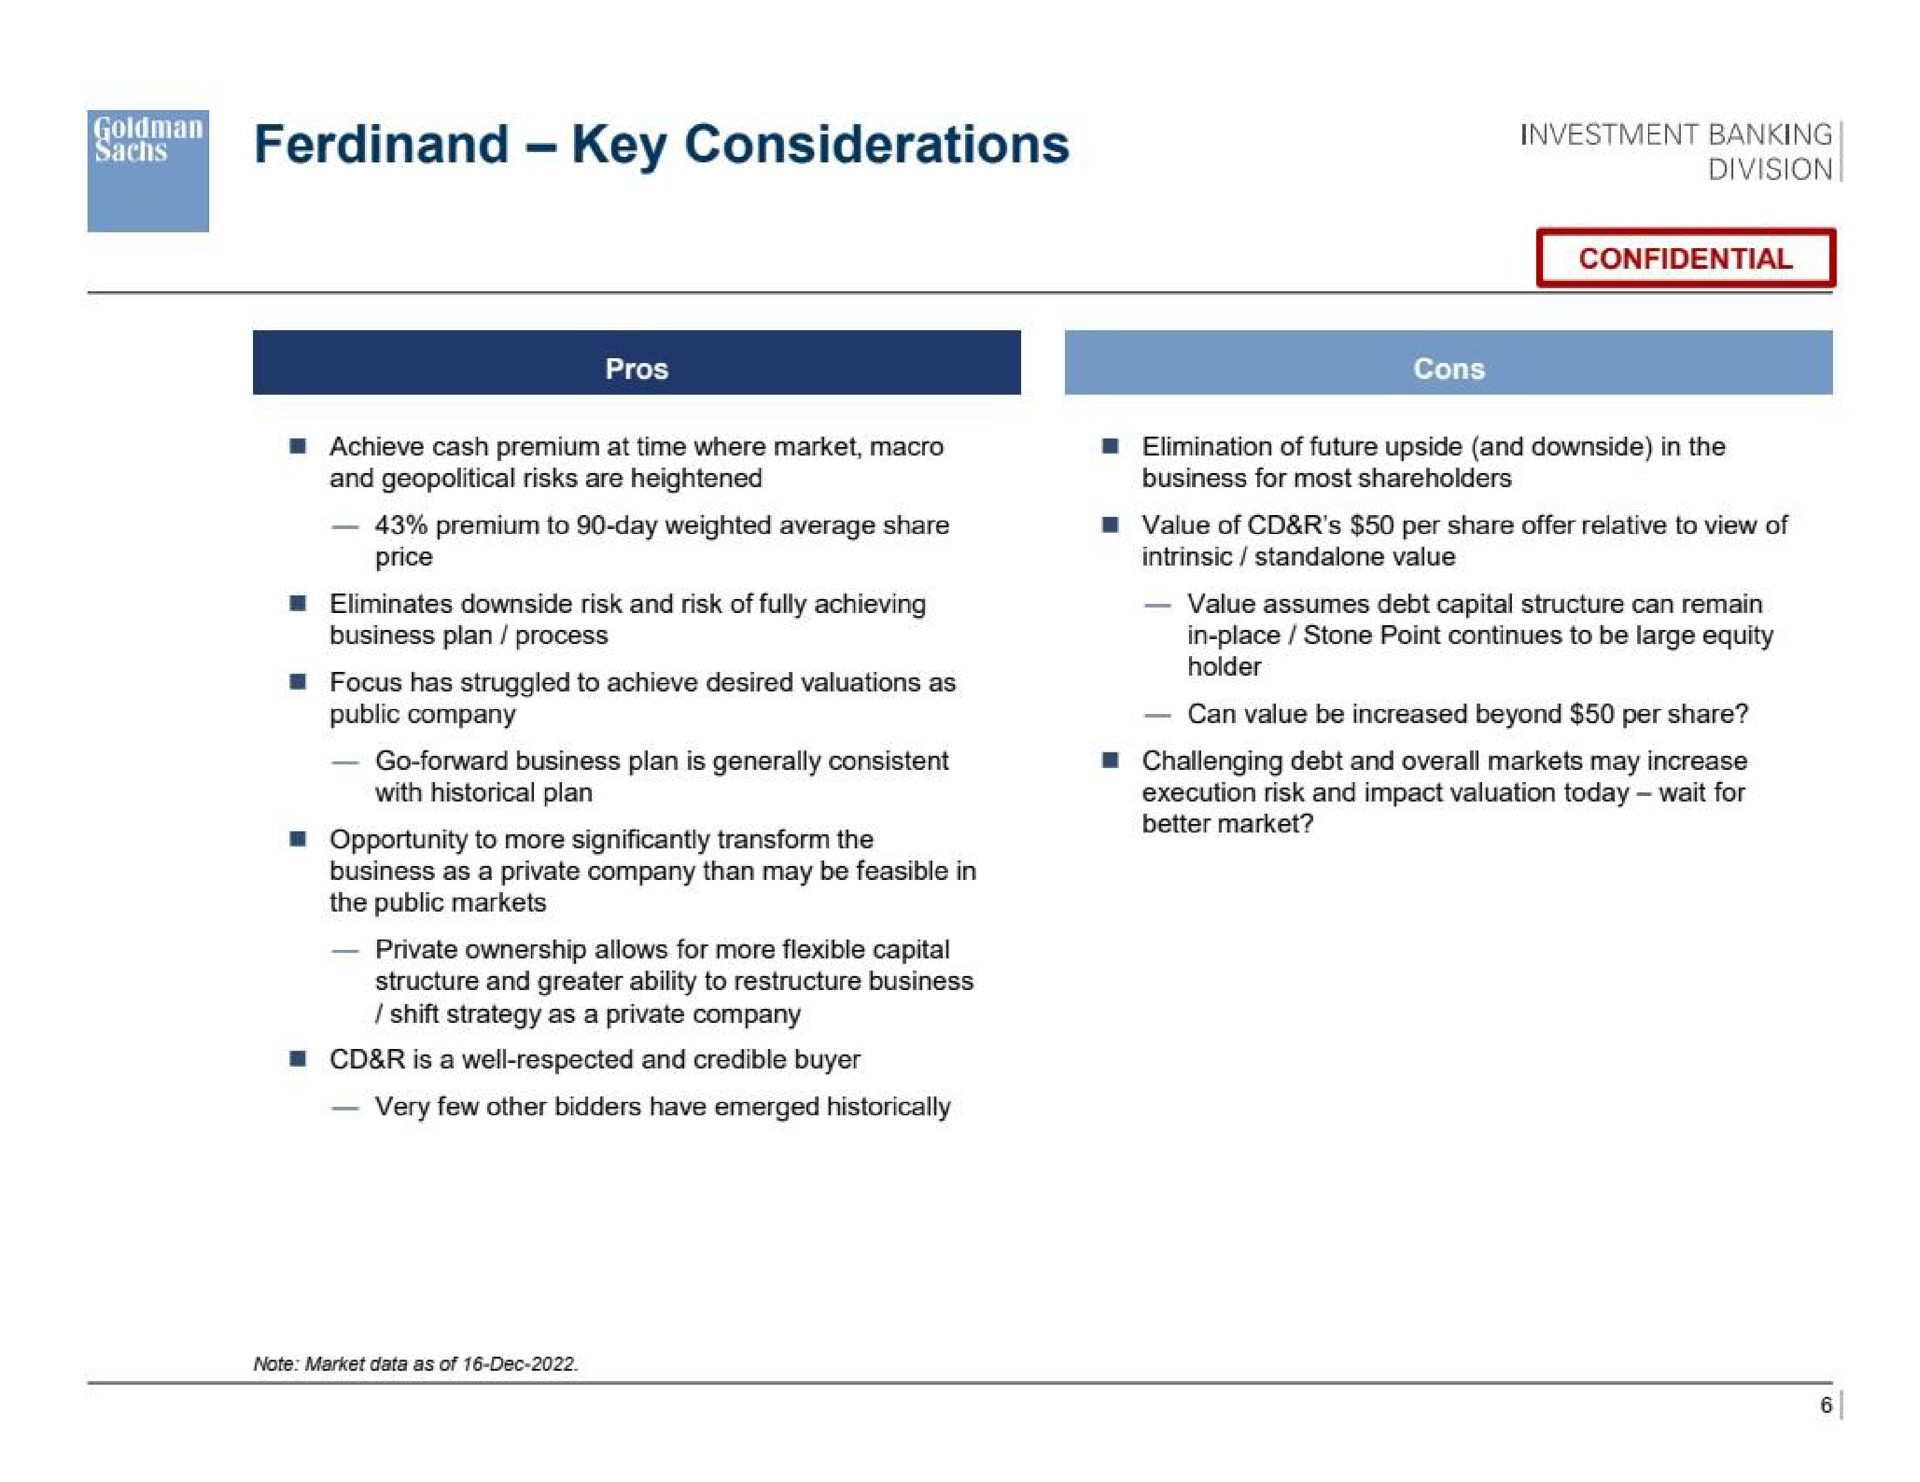 key considerations division confidential | Goldman Sachs